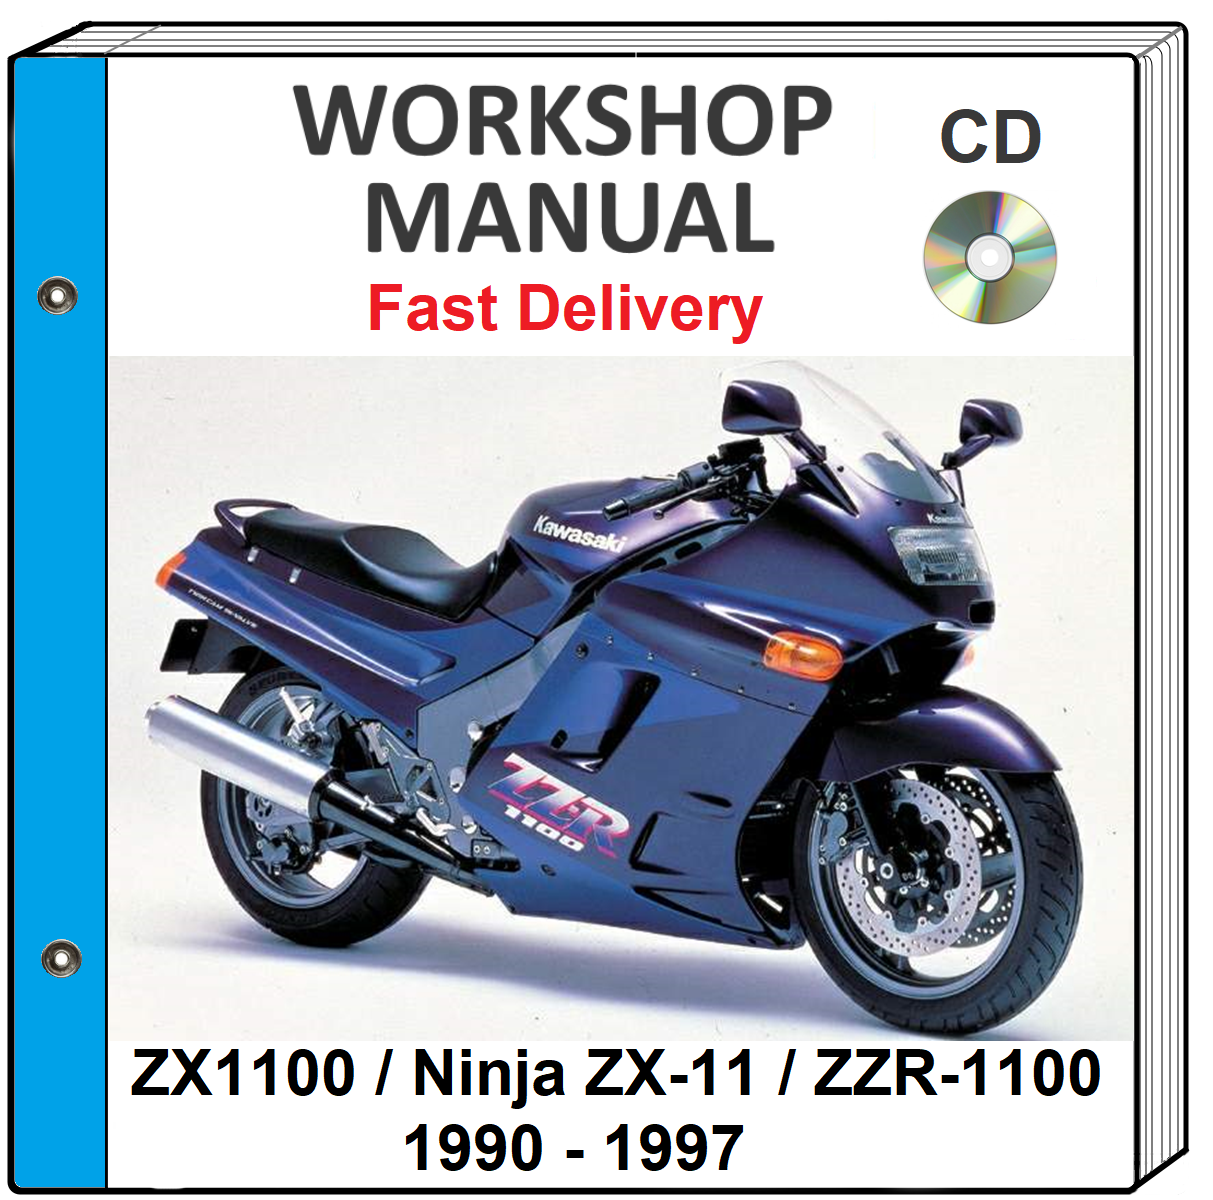 KAWASAKI NINJA ZX-11 ZZR1100 ZX1100 1990 - 1997 SERVICE REPAIR SHOP MANUAL